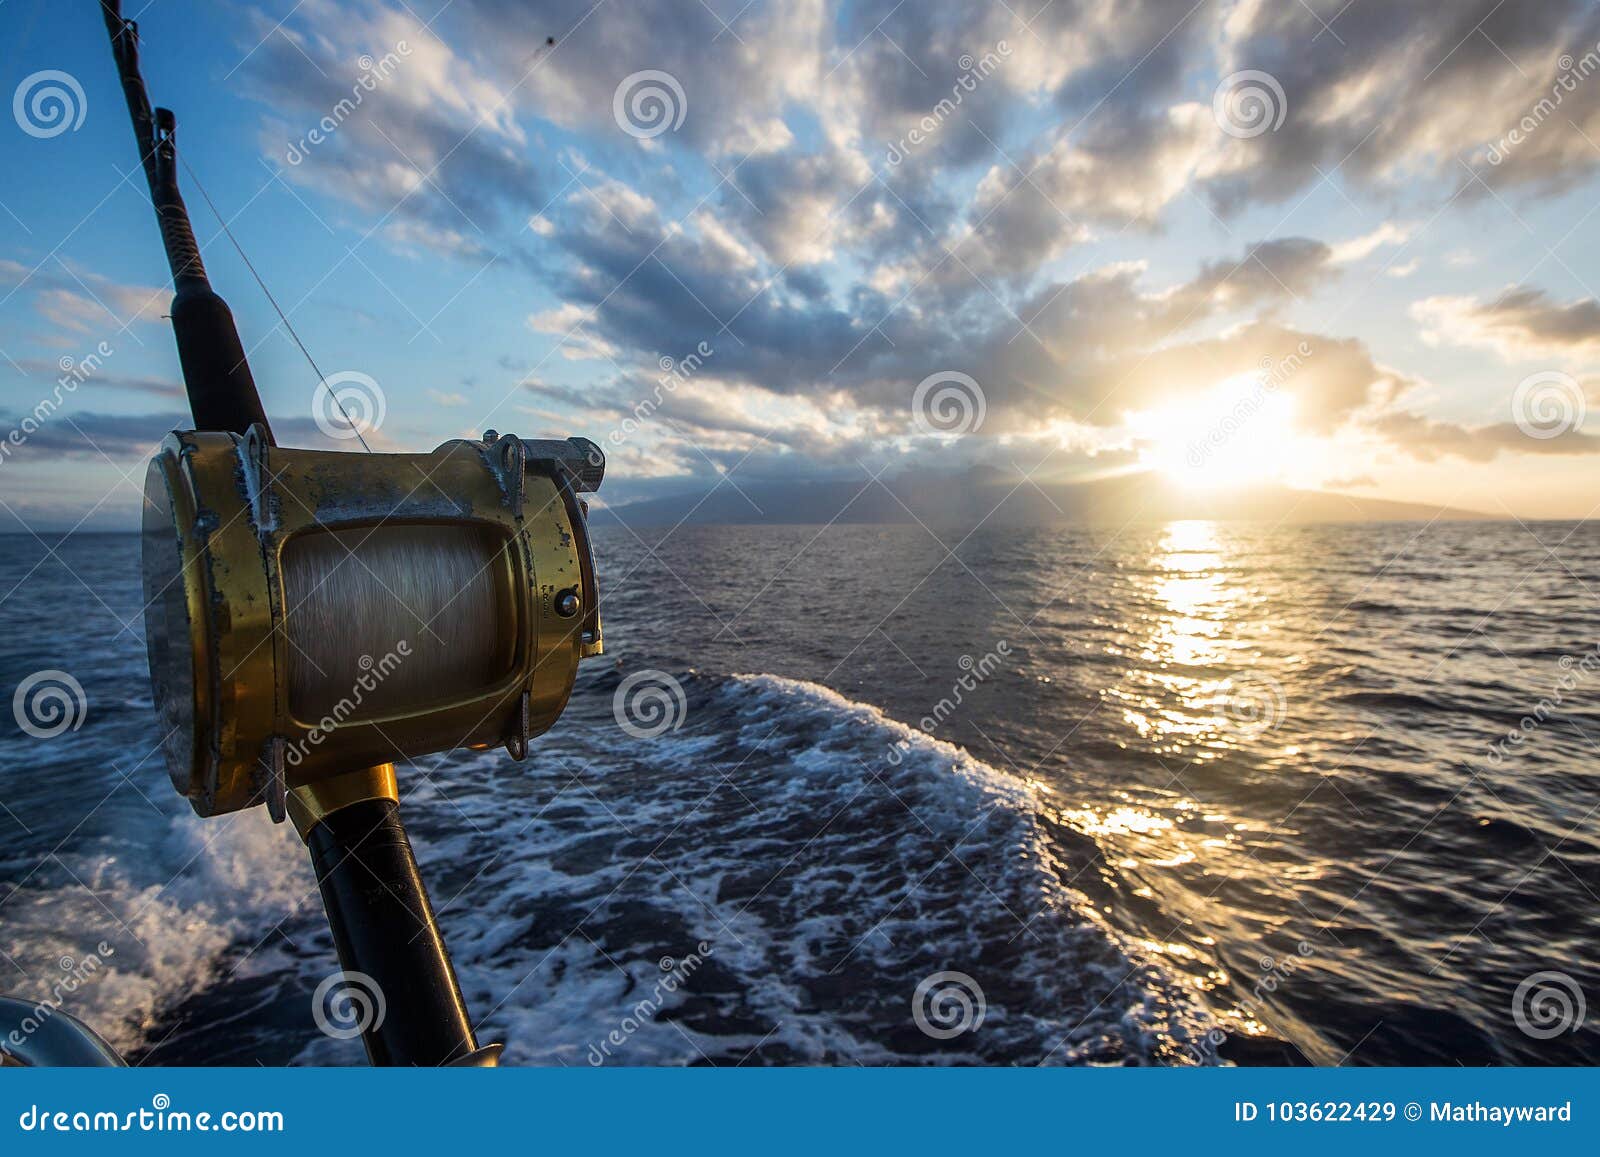 13,701 Deep Sea Fishing Stock Photos - Free & Royalty-Free Stock